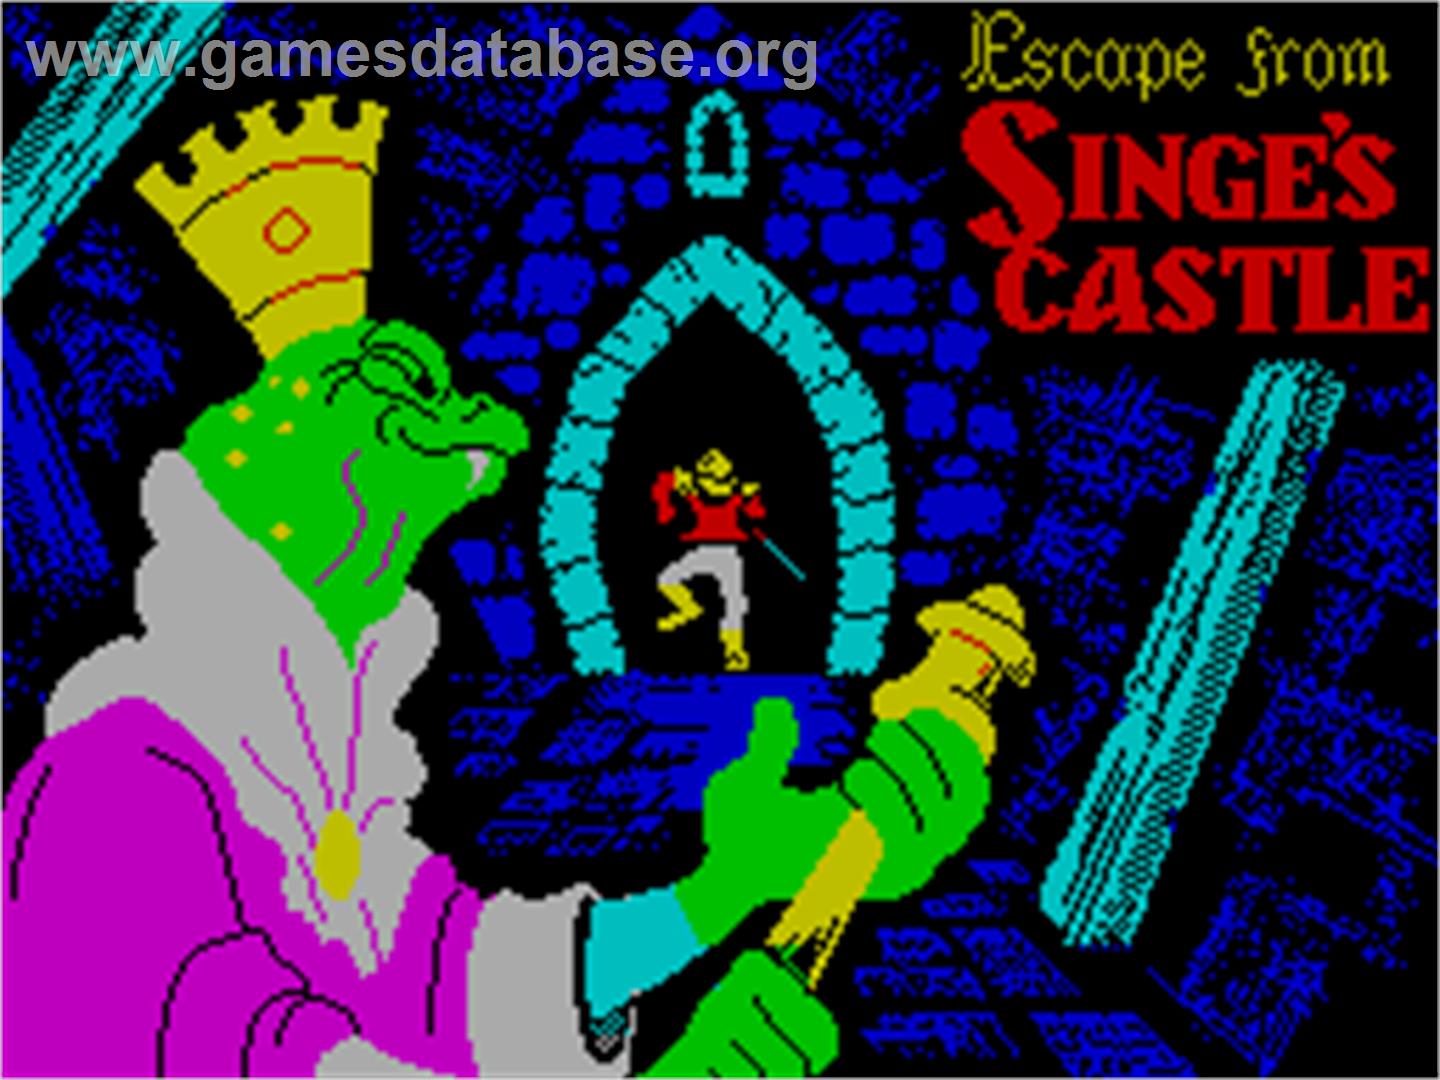 Dragon's Lair II: Escape from Singe's Castle - Sinclair ZX Spectrum - Artwork - Title Screen